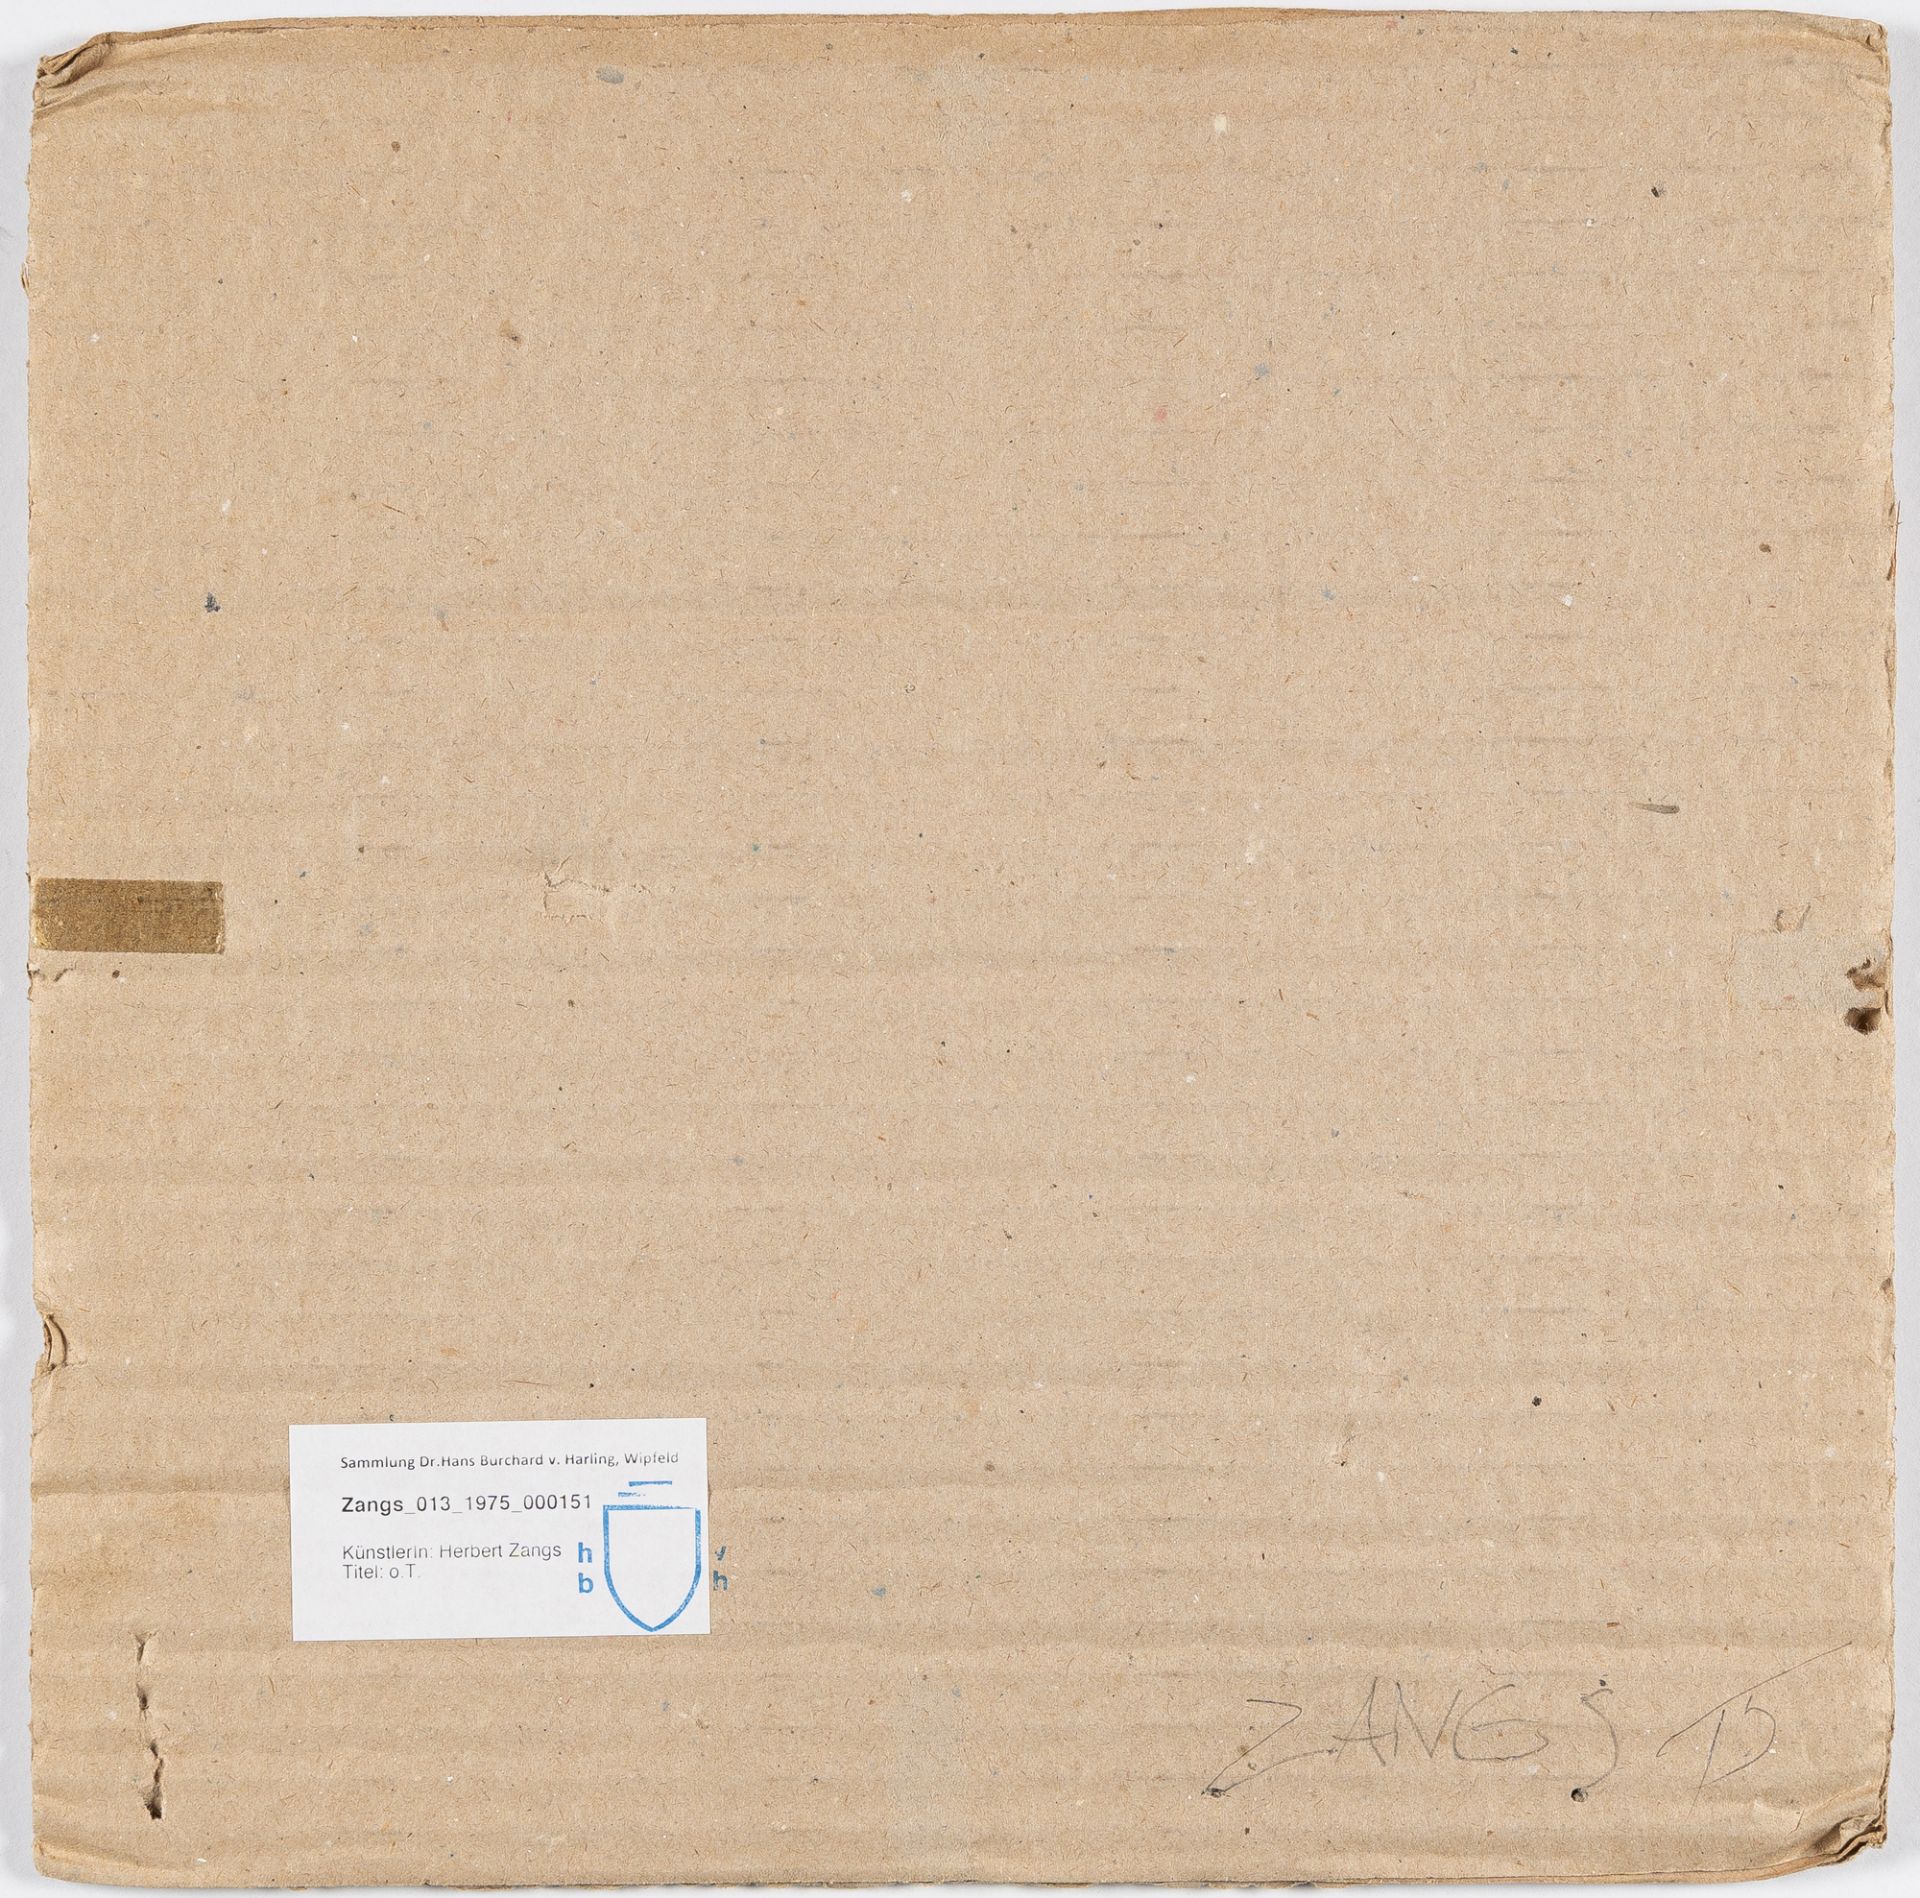 Herbert Zangs (1924 - Krefeld - 2003), UntitledIncised corrugated cardboard. (19)75. Ca. 31 x 31 cm. - Image 3 of 3